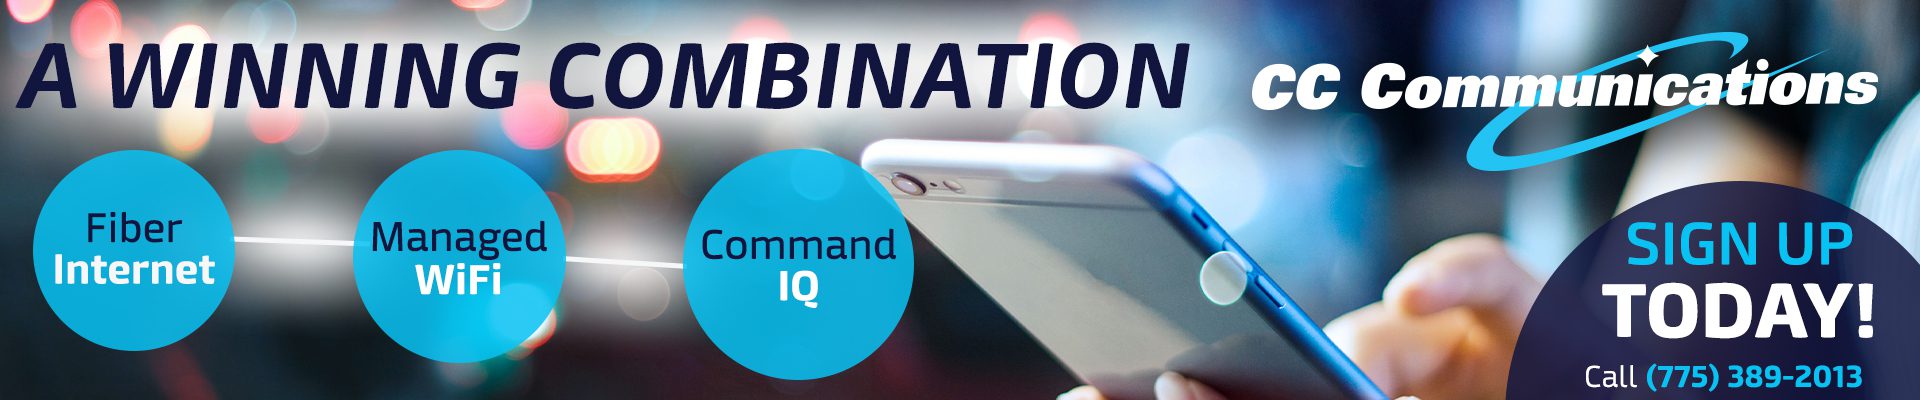 A winning combination: Fiber Internet, Managed WiFi, and CommandIQ from CC Communications.